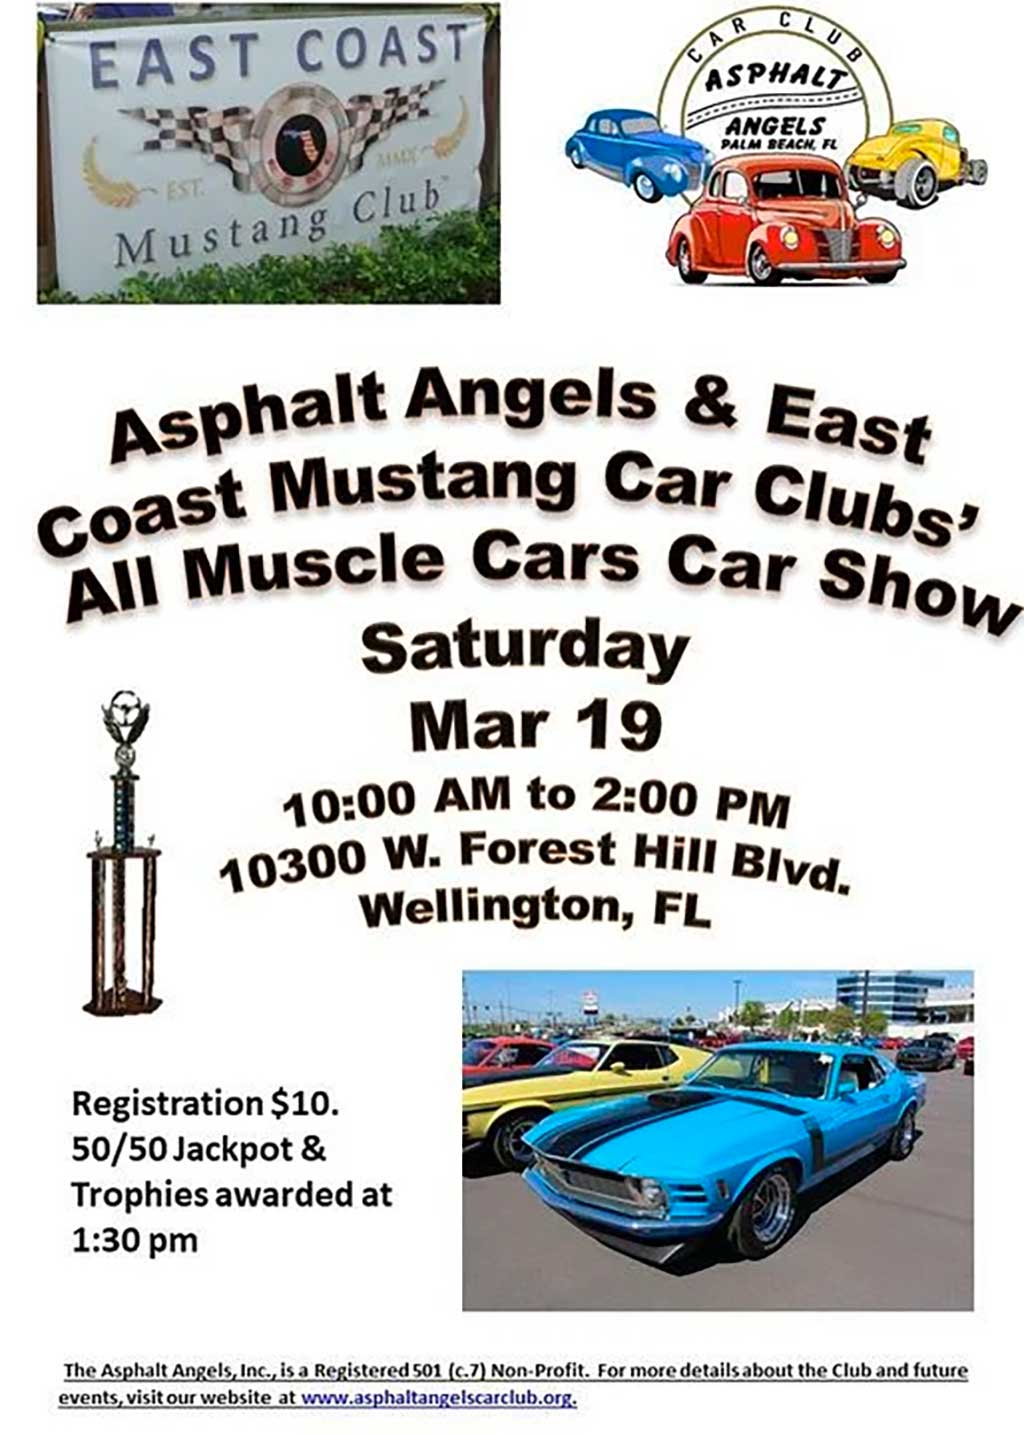 Asphalt Angels & East Coast Mustang Car Clubs' All Muscle Cars Car Show